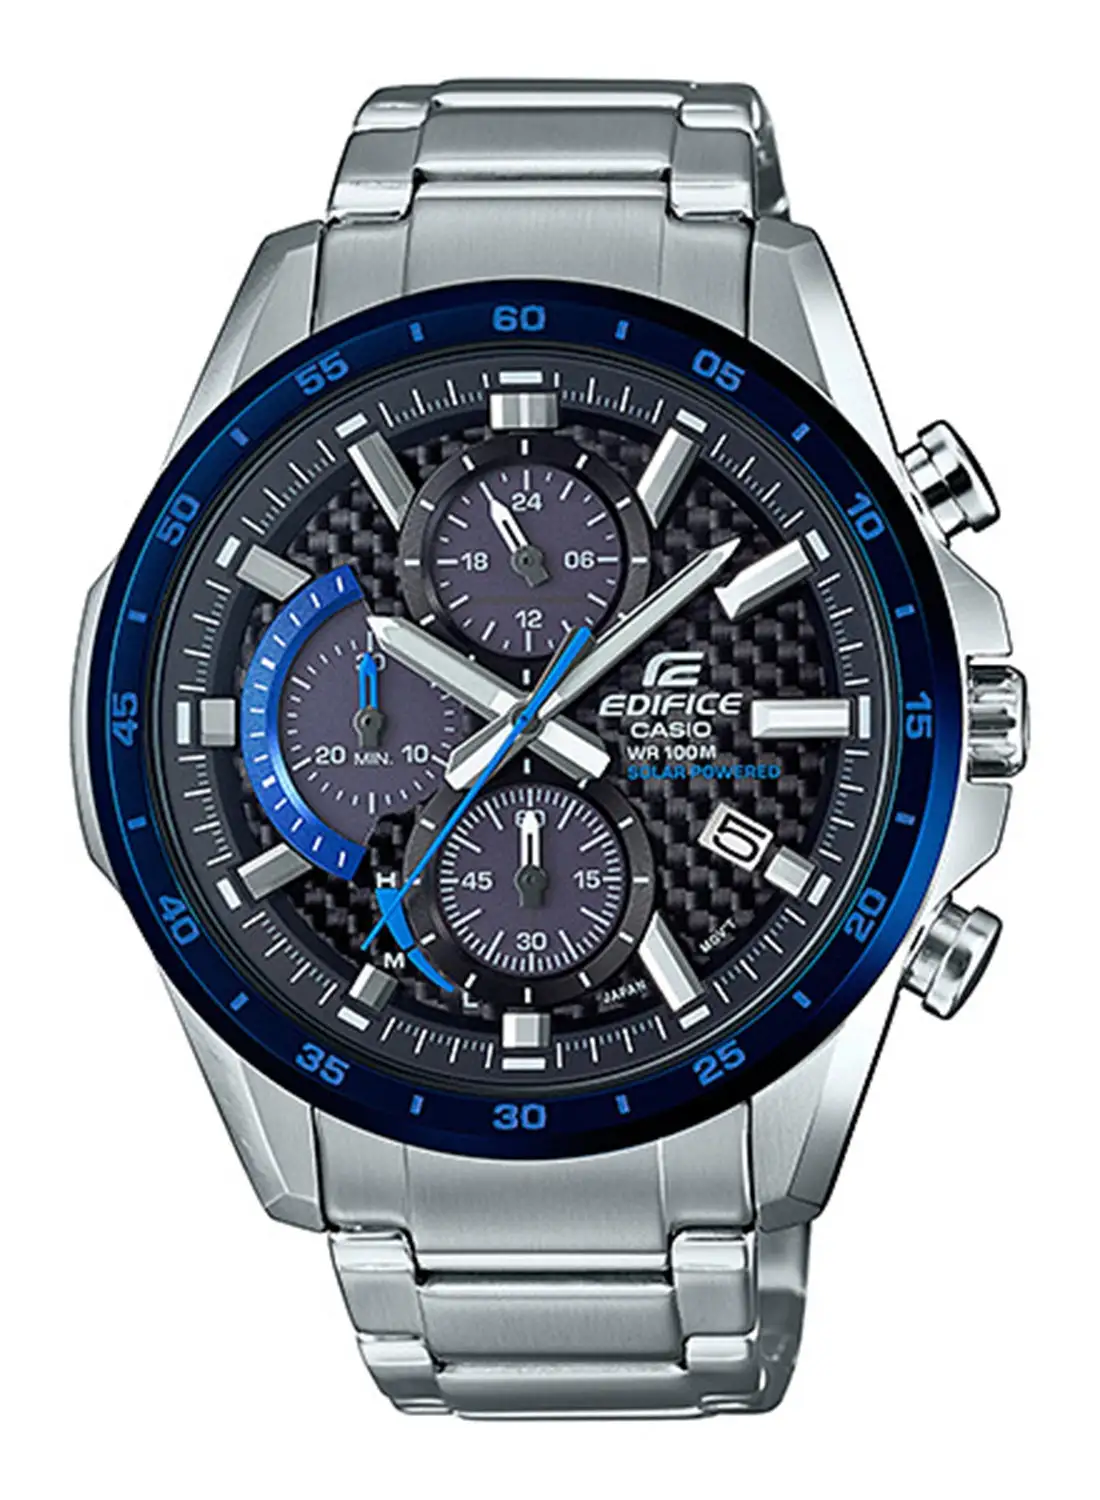 CASIO Men's Analog Stainless Steel Wrist Watch EQS-900DB-2AVUDF - 42 Mm